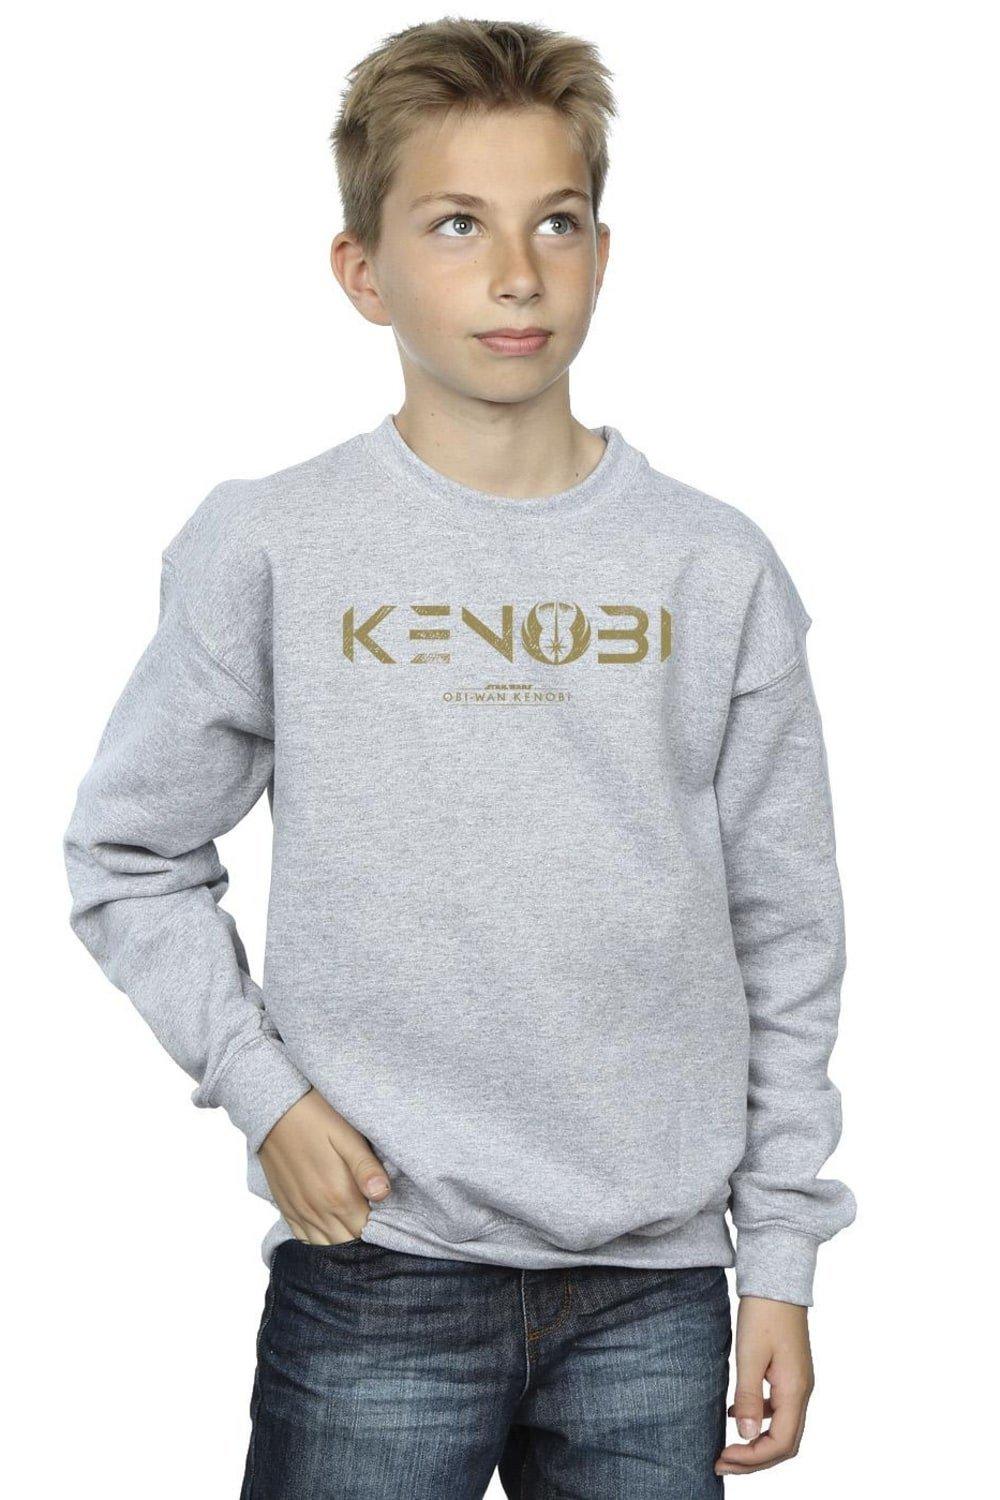 Obi-Wan Kenobi Logo Sweatshirt